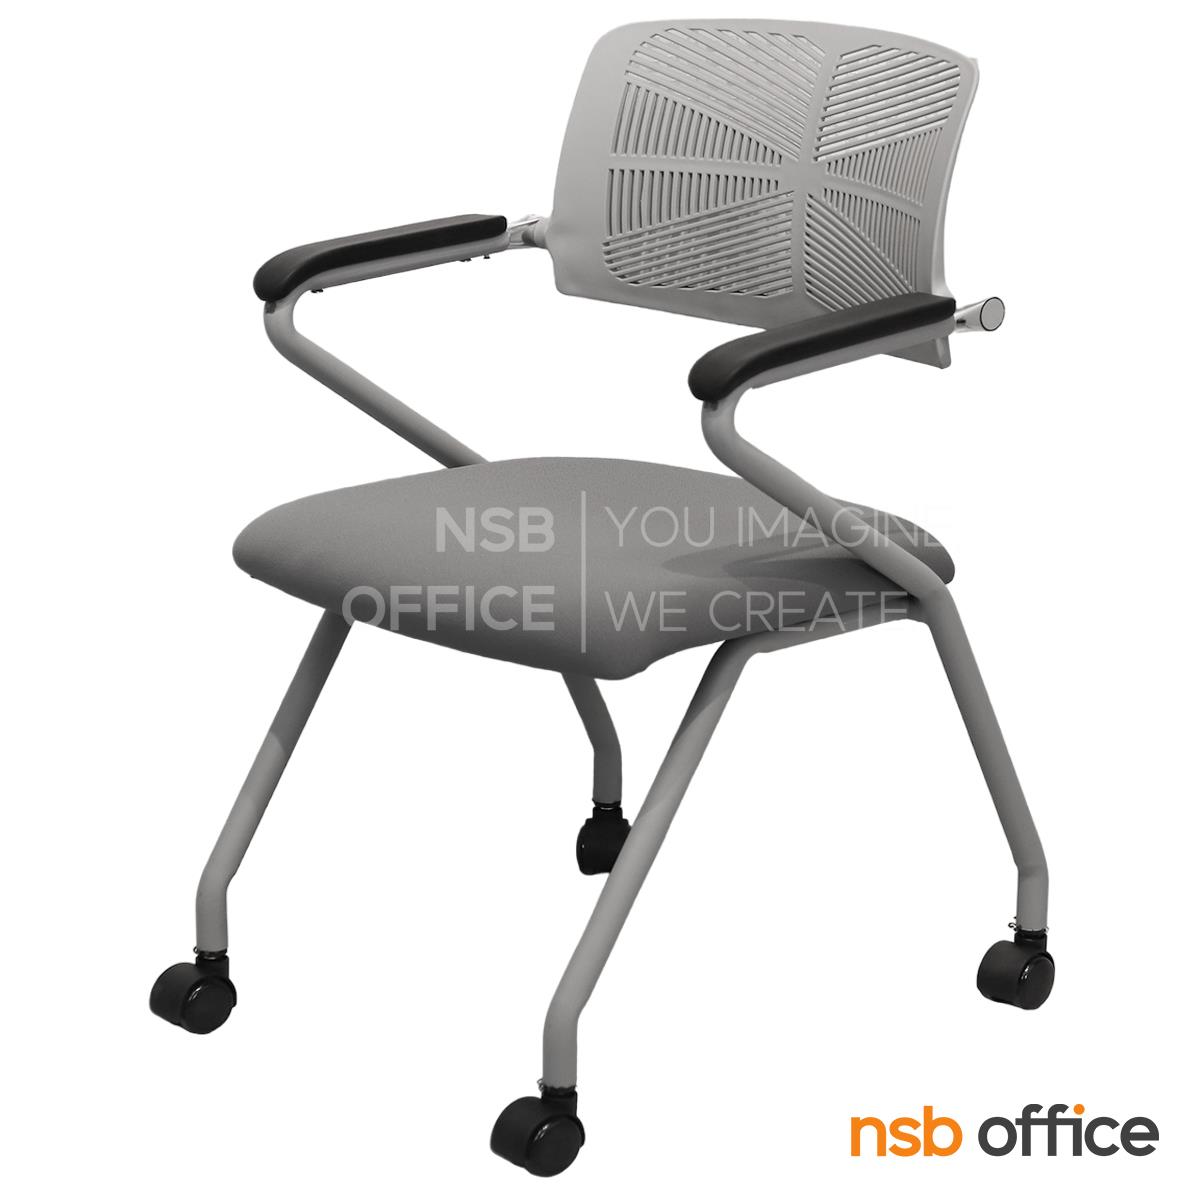 B05A197:เก้าอี้อเนกประสงค์เฟรมโพลี่ล้อเลื่อน  รุ่น Carnation (คาร์เนชัน)   